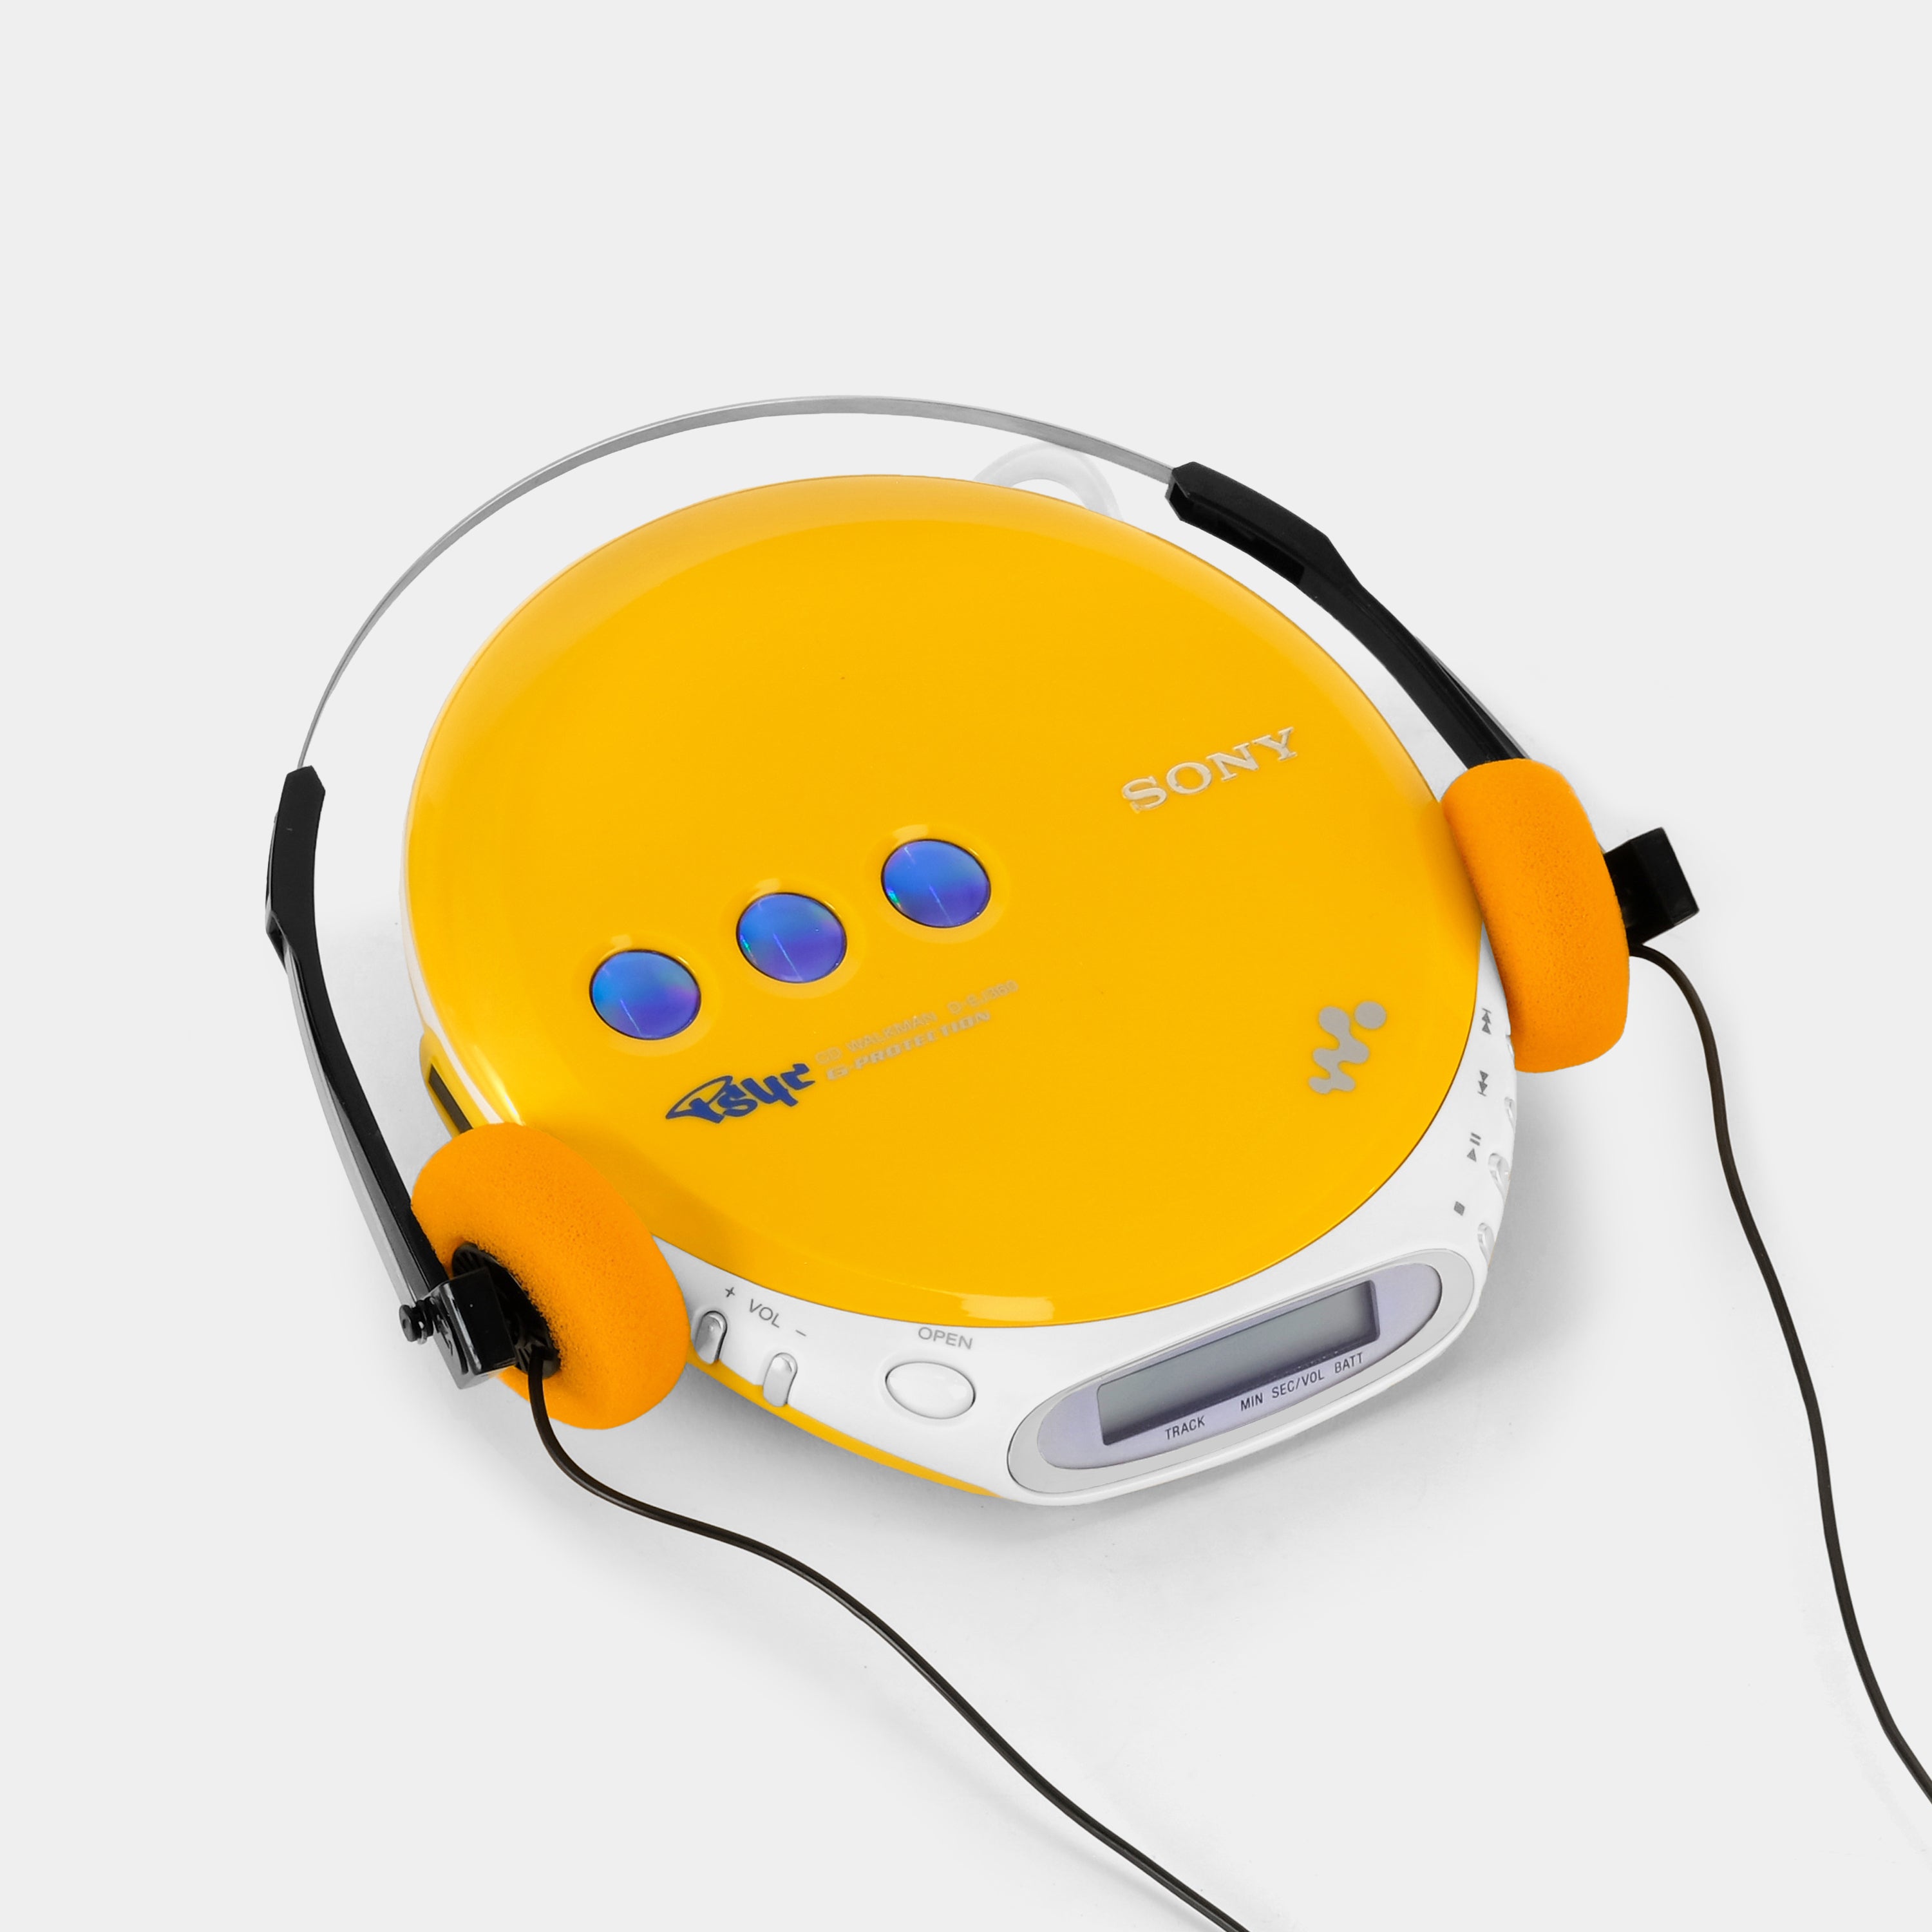 Sony Psyc D-EJ360 Yellow Portable CD Player